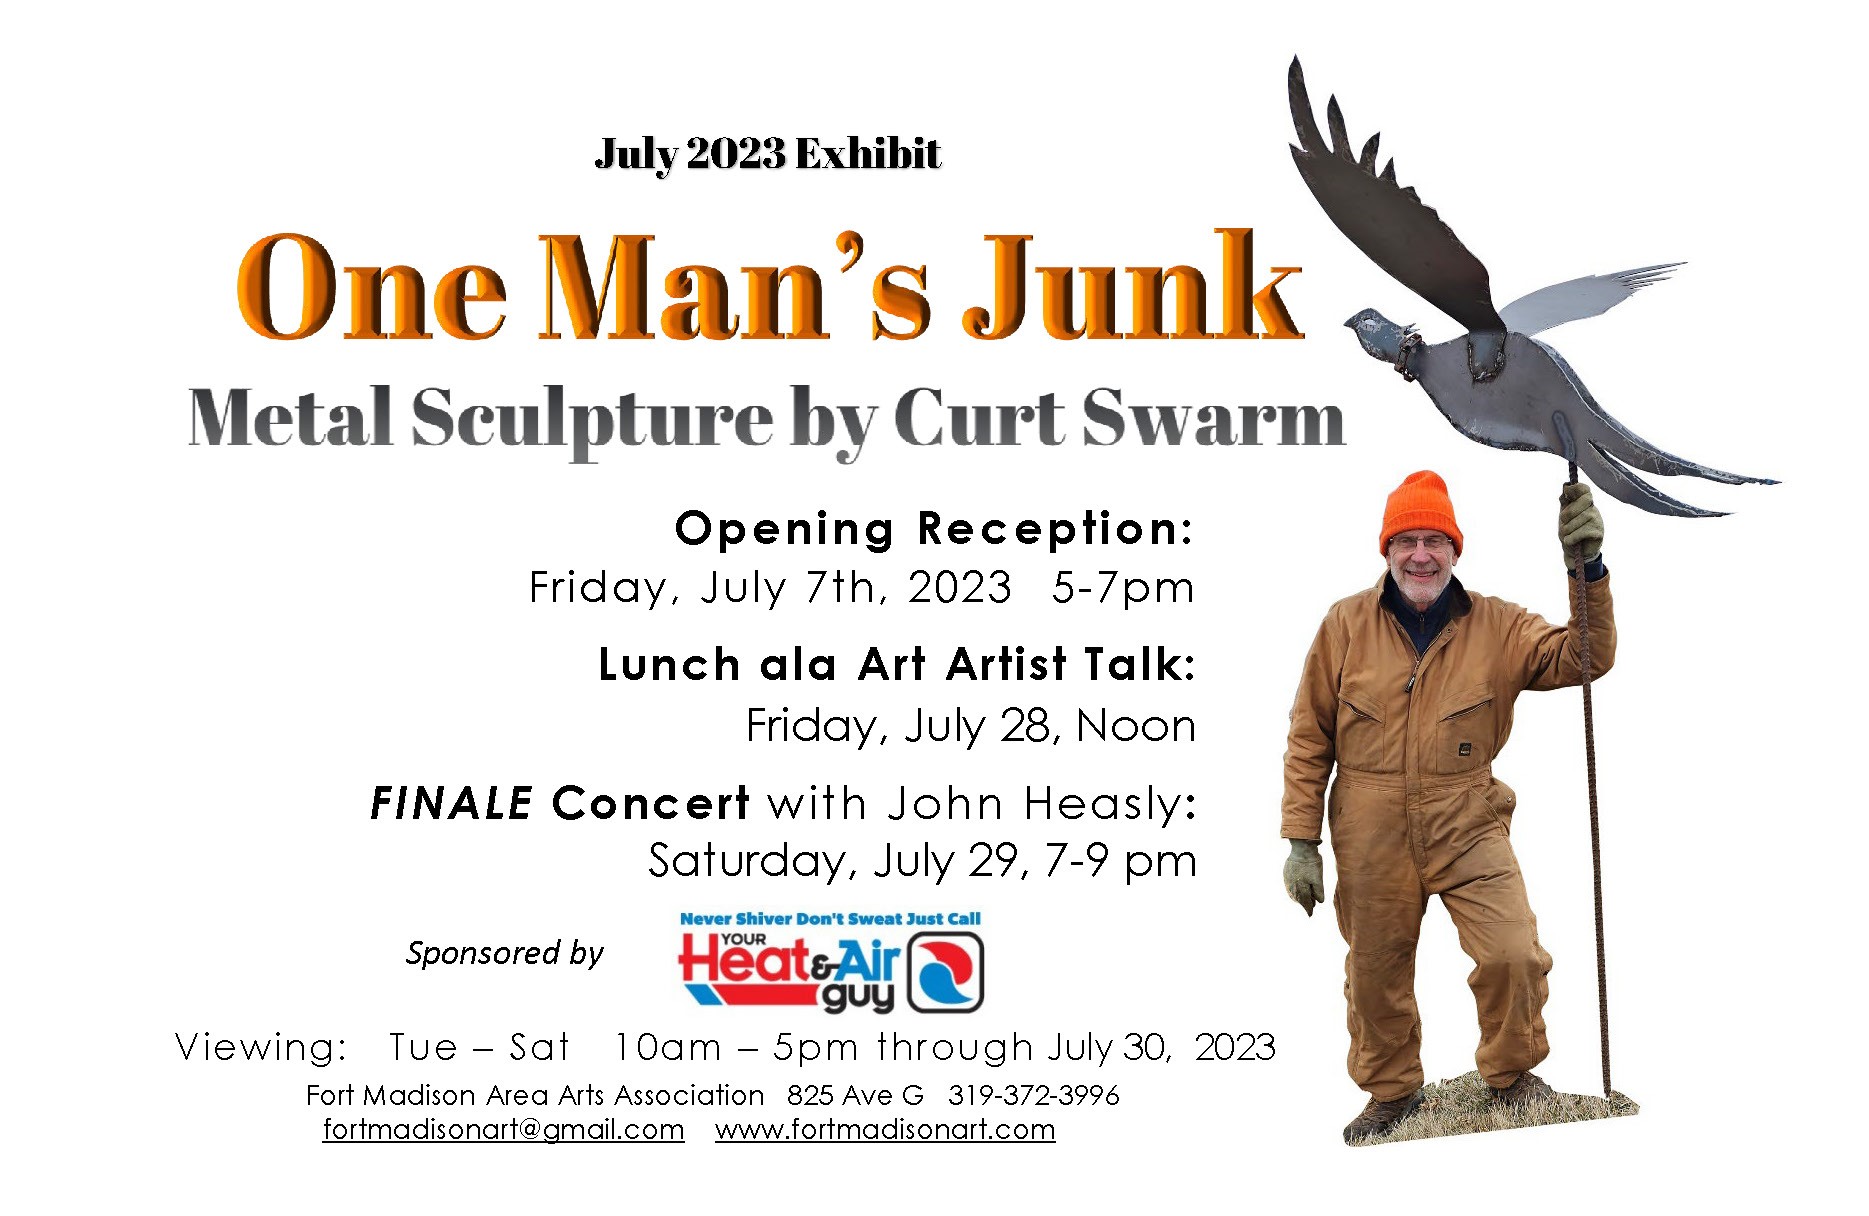 One Man’s Junk | Curt Swarm